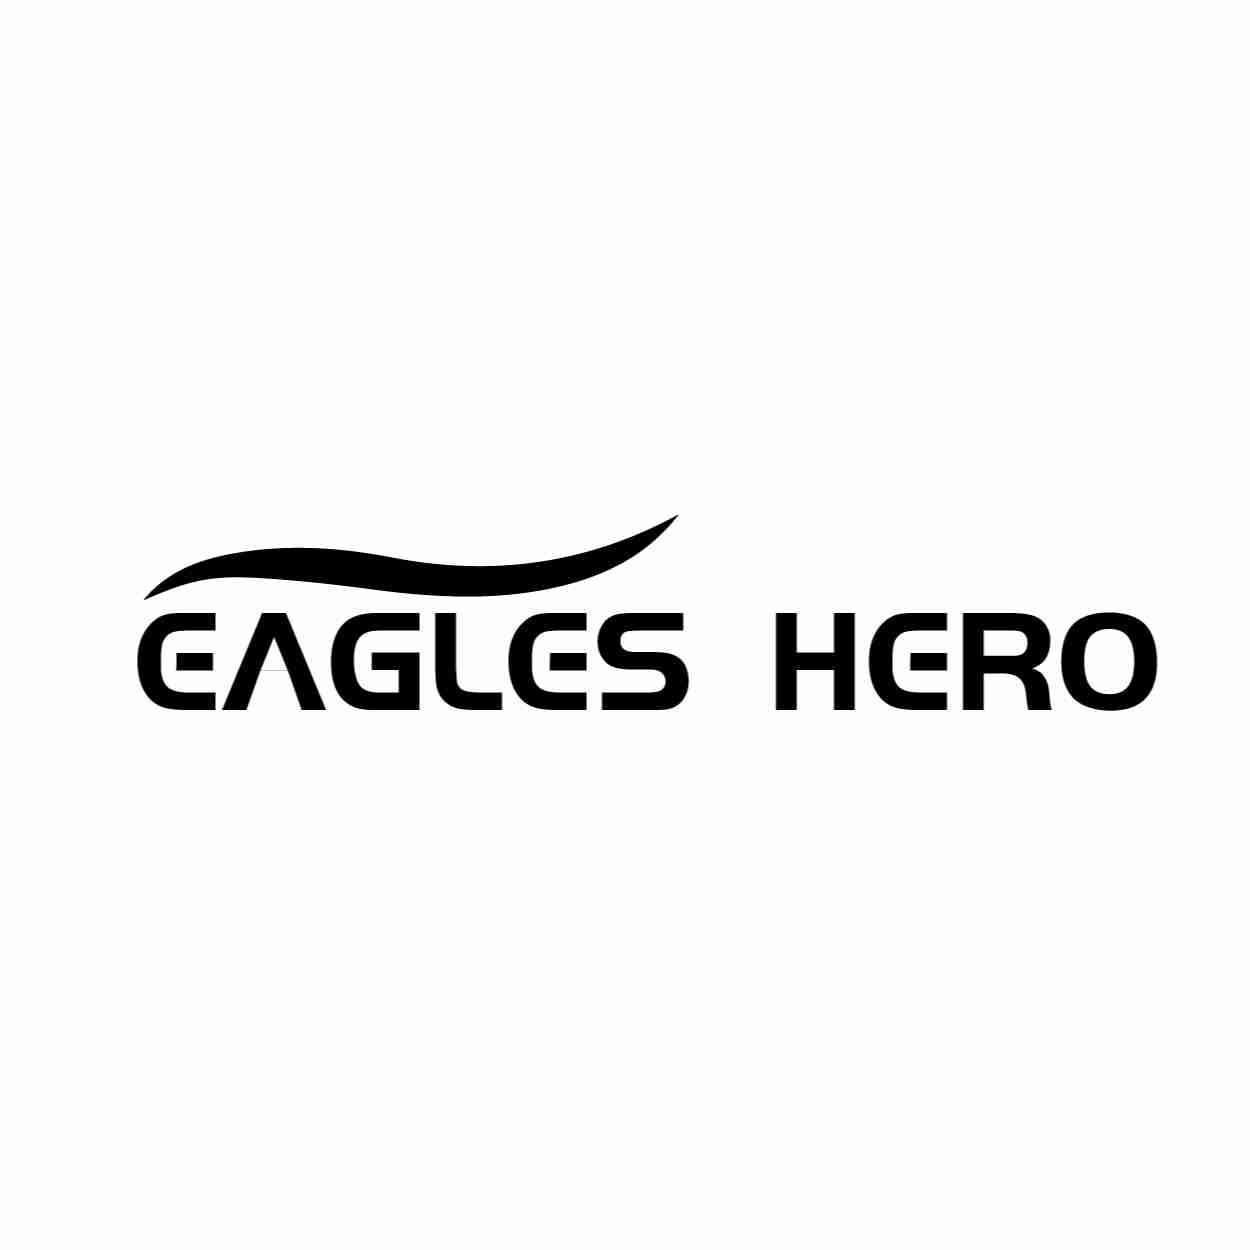 EAGLES HERO